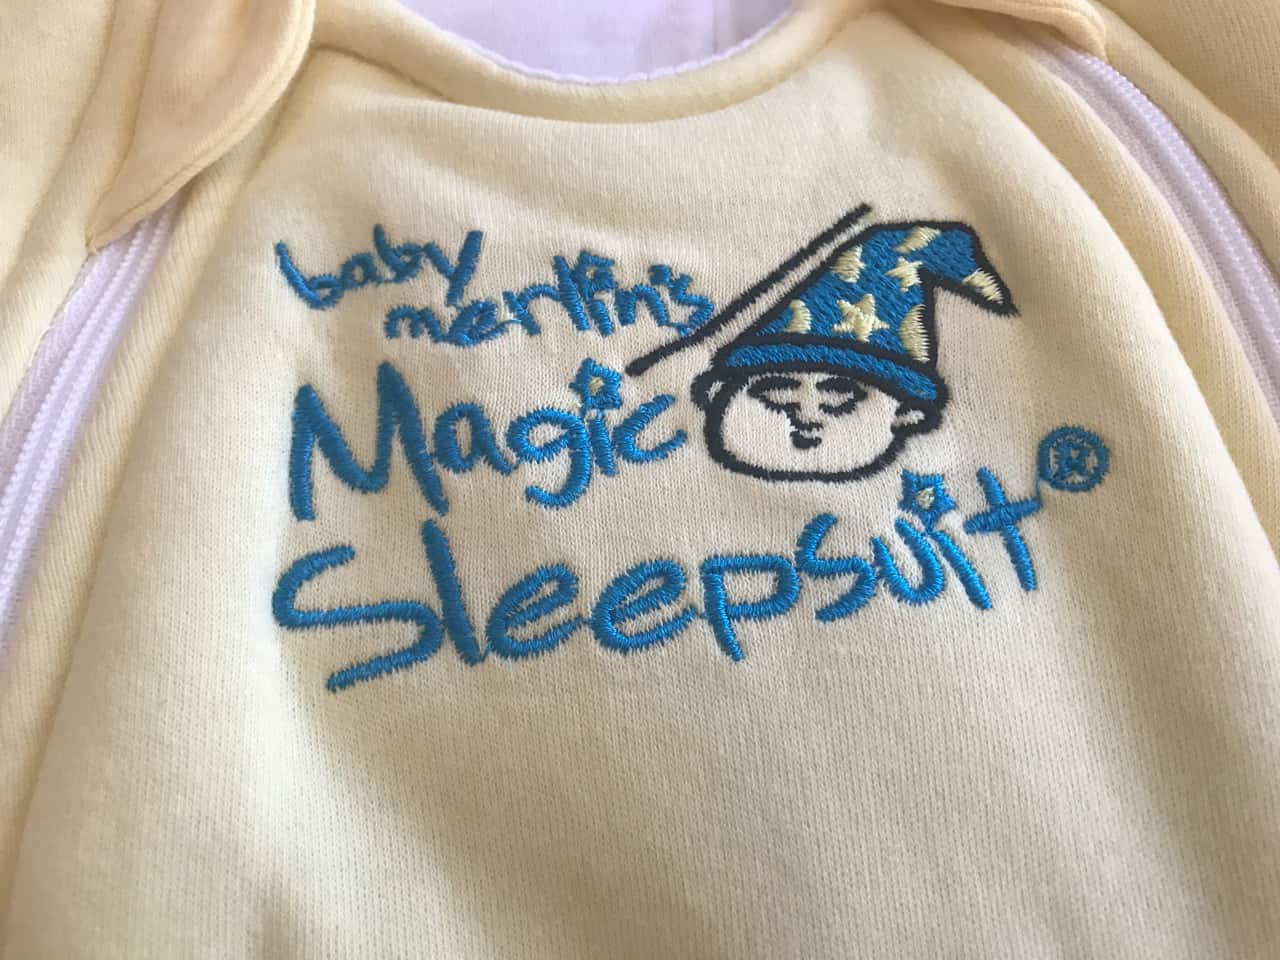 baby martins magic sleep suit